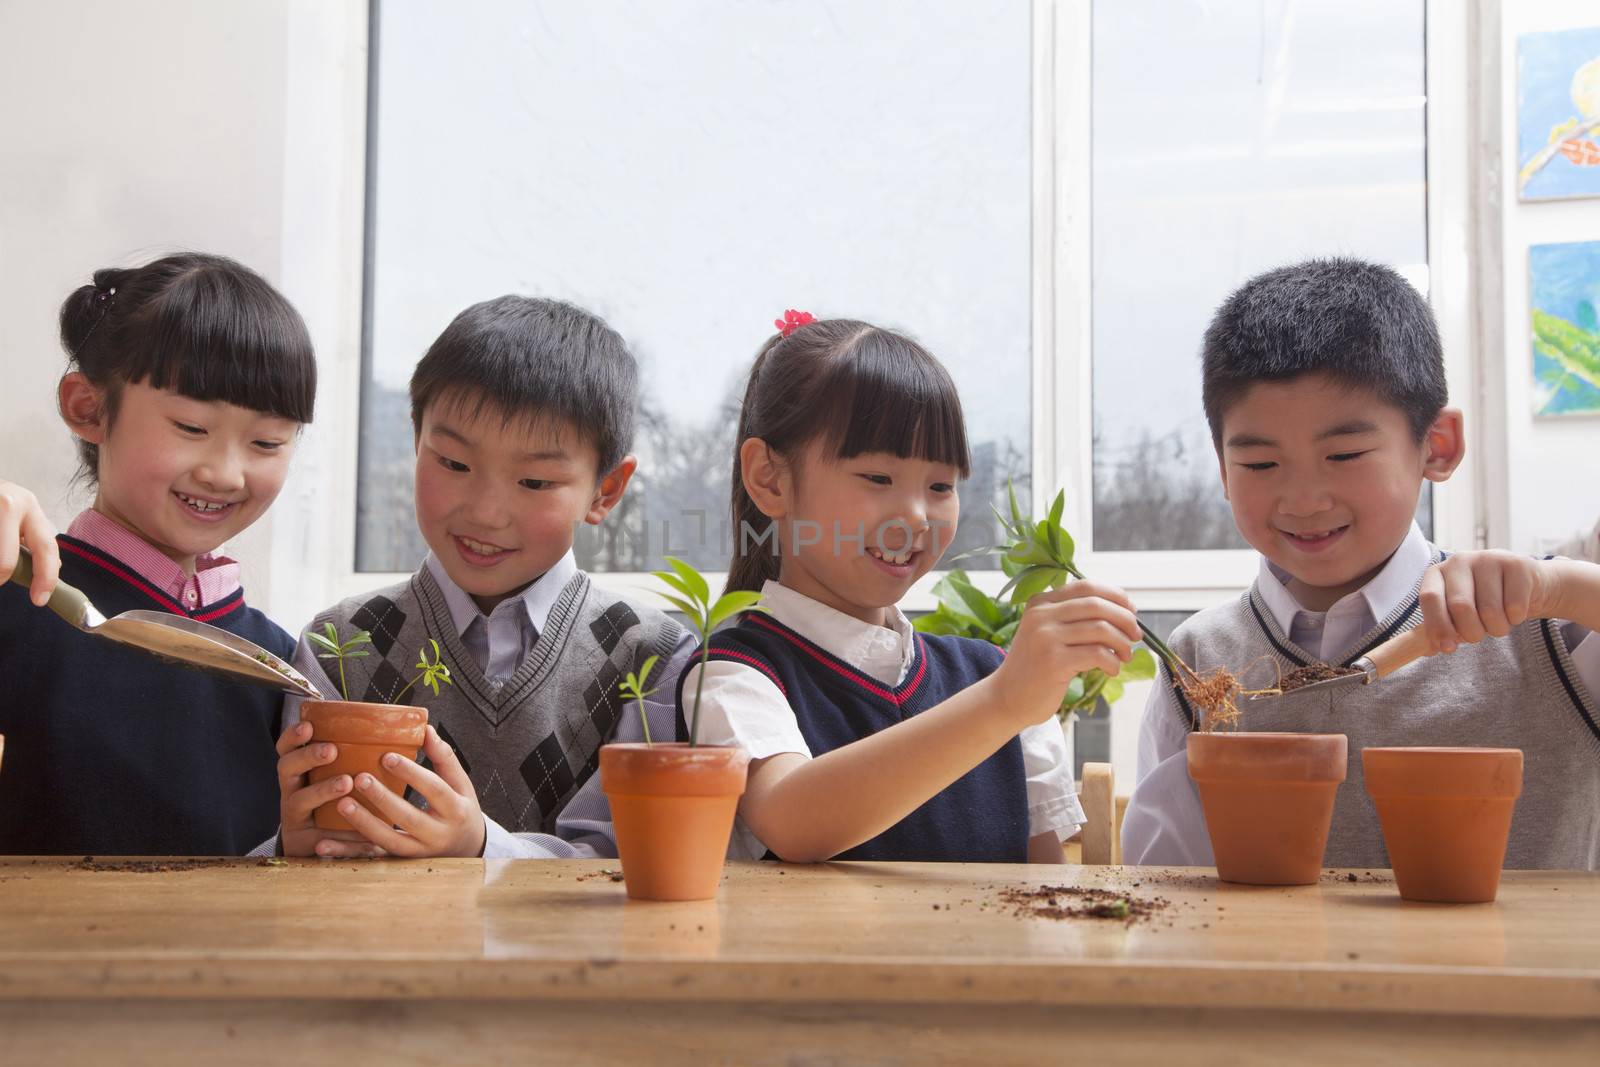 Schoolchildren planting plants into flowerpots in the classroom by XiXinXing